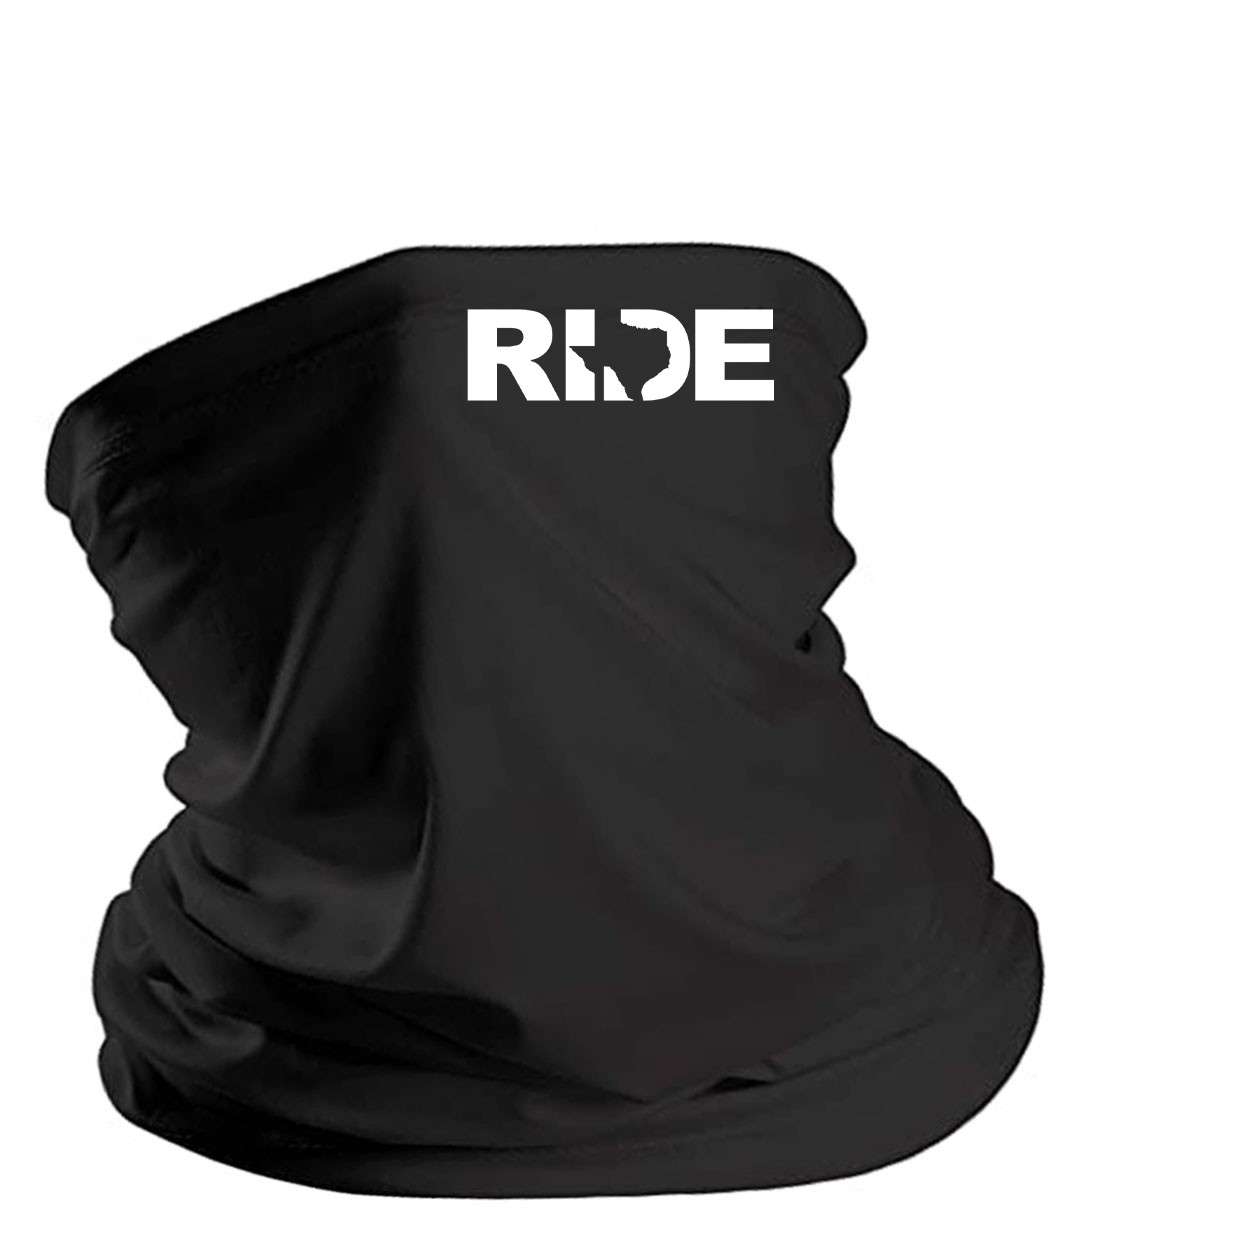 Ride Texas Night Out Lightweight Neck Gaiter Face Mask Black (White Logo)